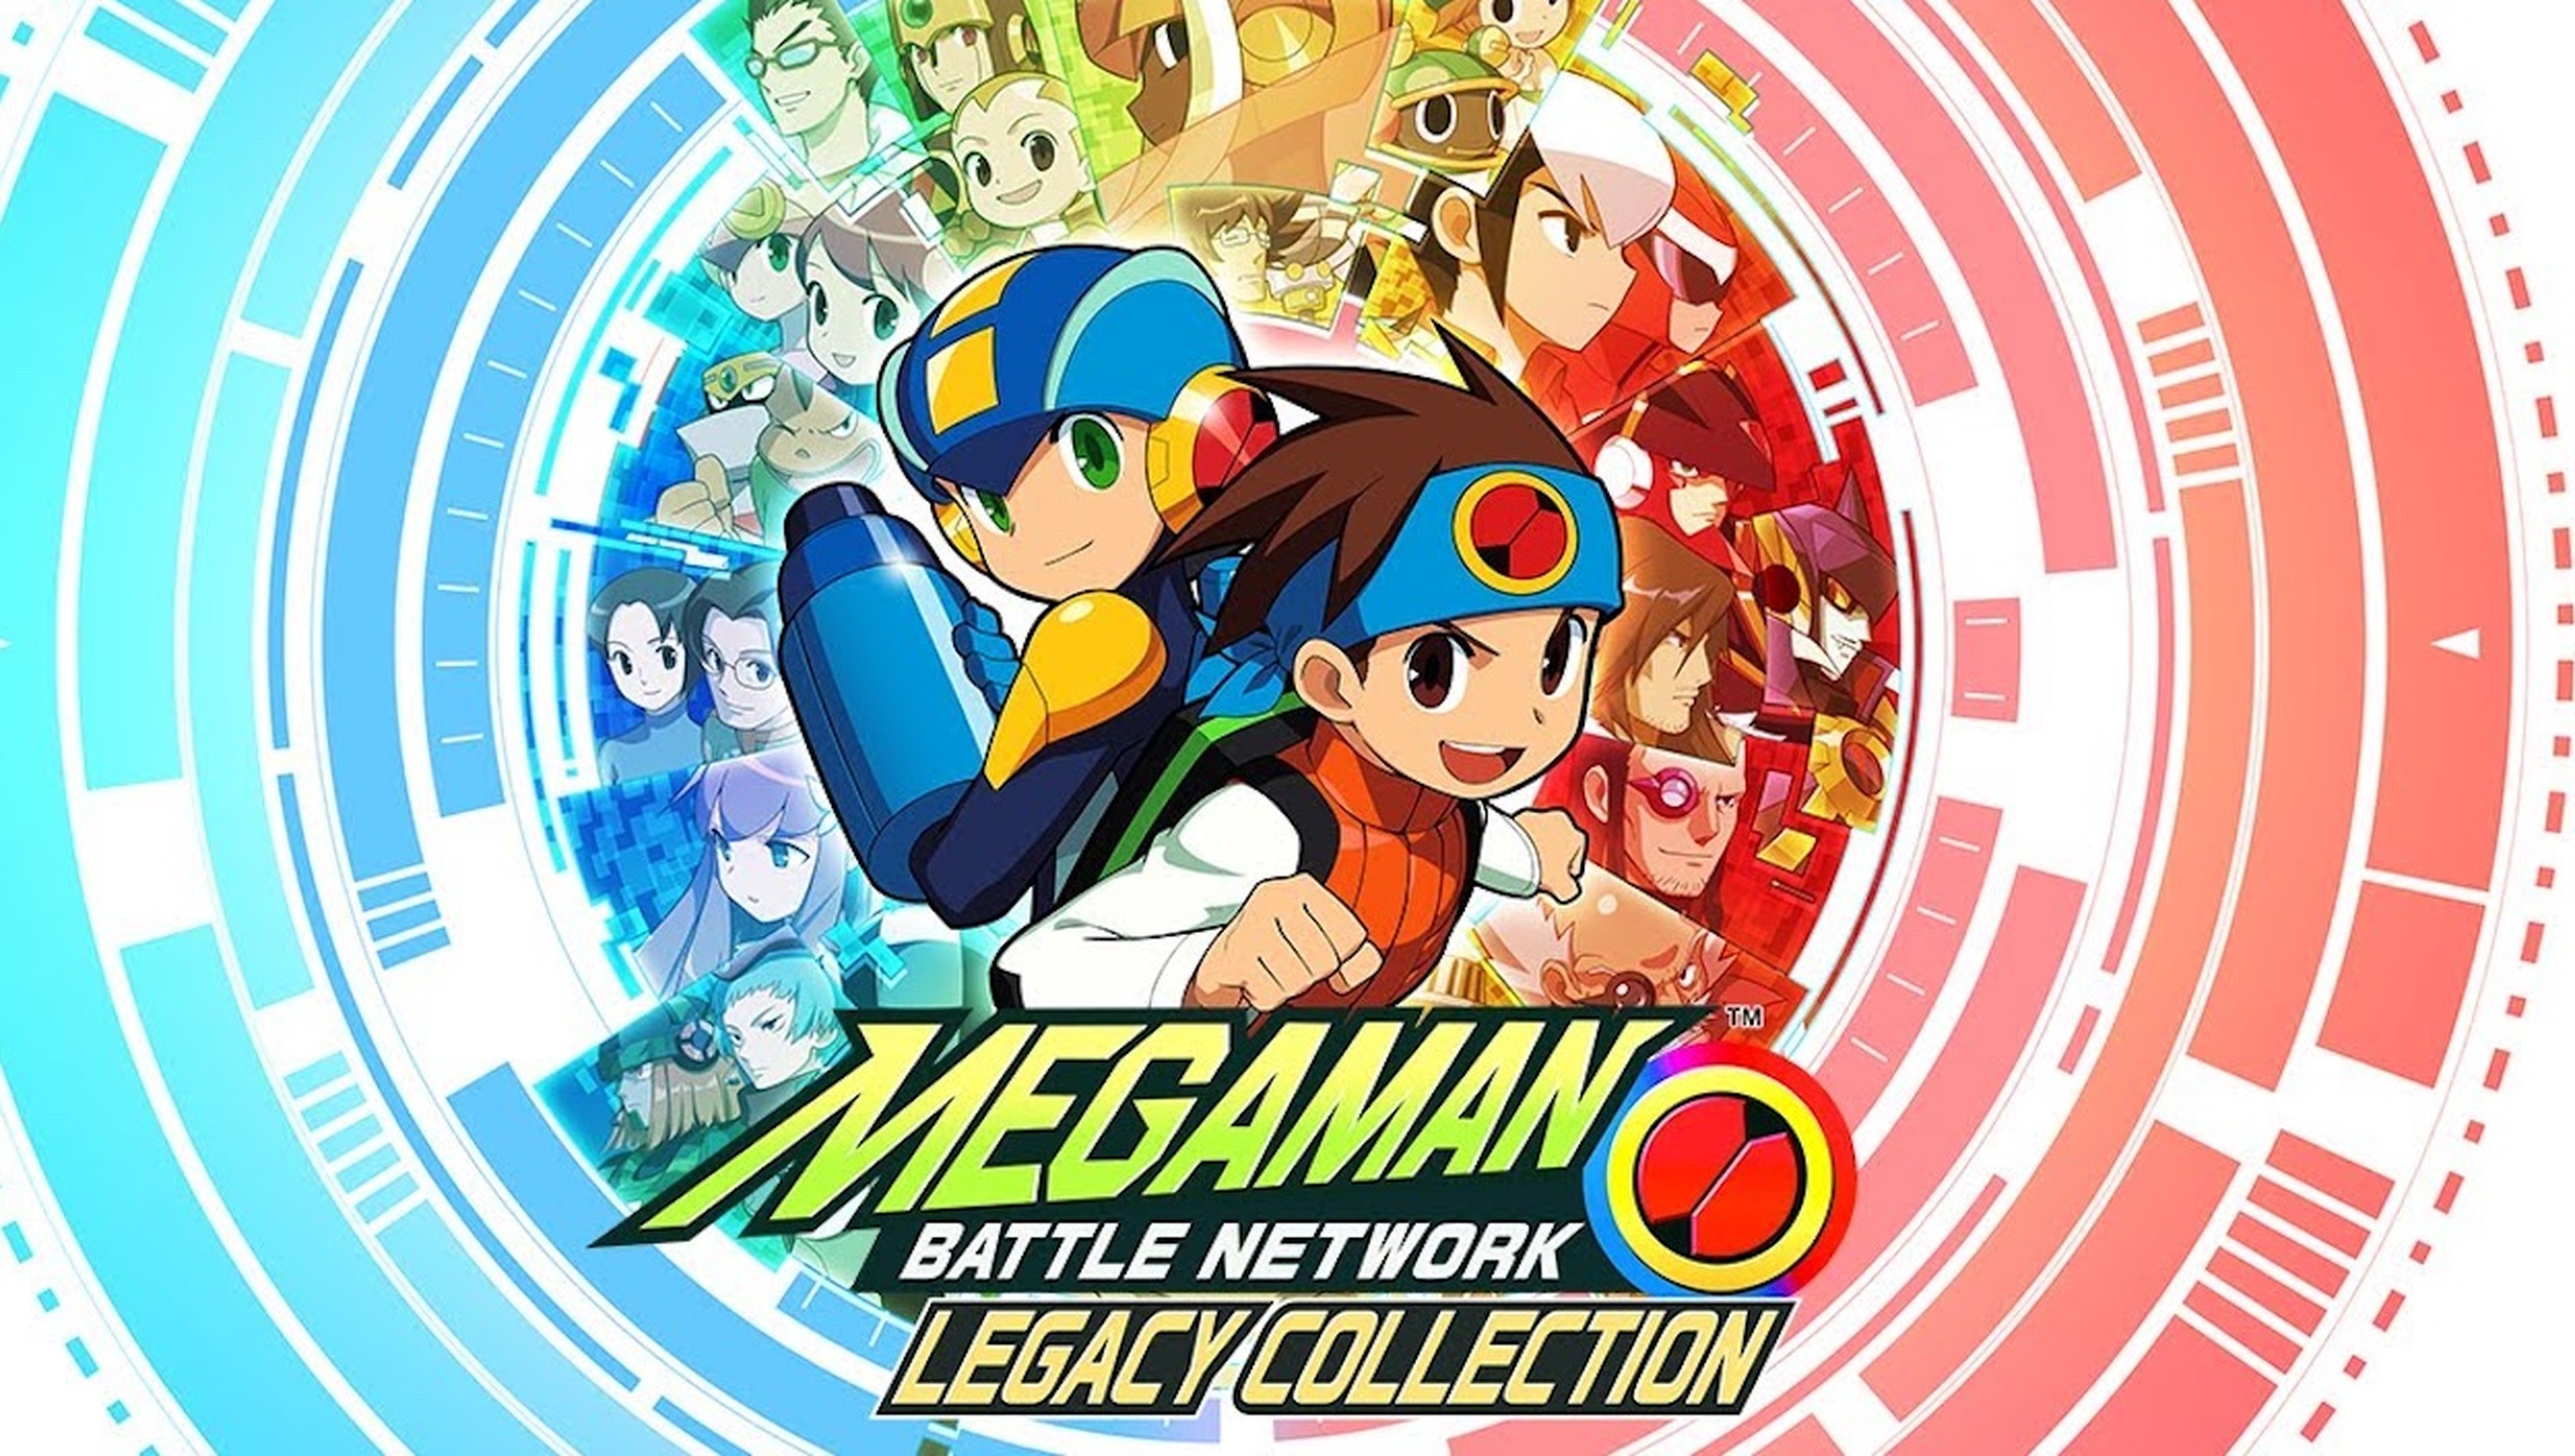 Análisis Mega Man Battle Network Legacy Collection